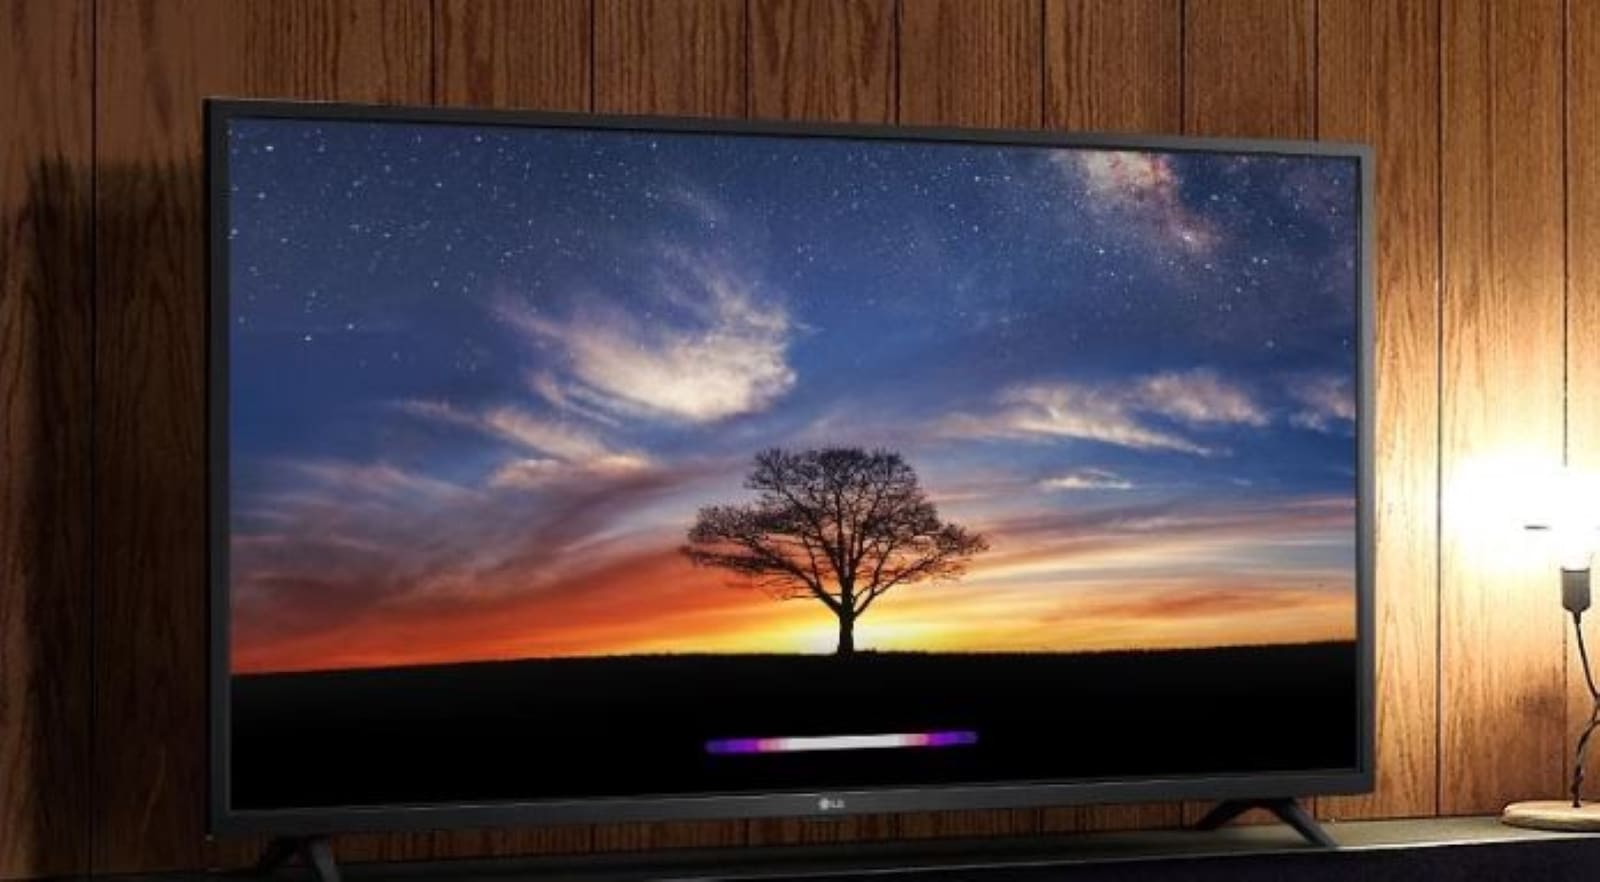 Лучшие телевизоры 43 дюйма цена качество. Телевизор LG 43um7450. LG 32lm6350. Телевизор LG 32lm6350. LG 2020 телевизоры 43 дюйма.